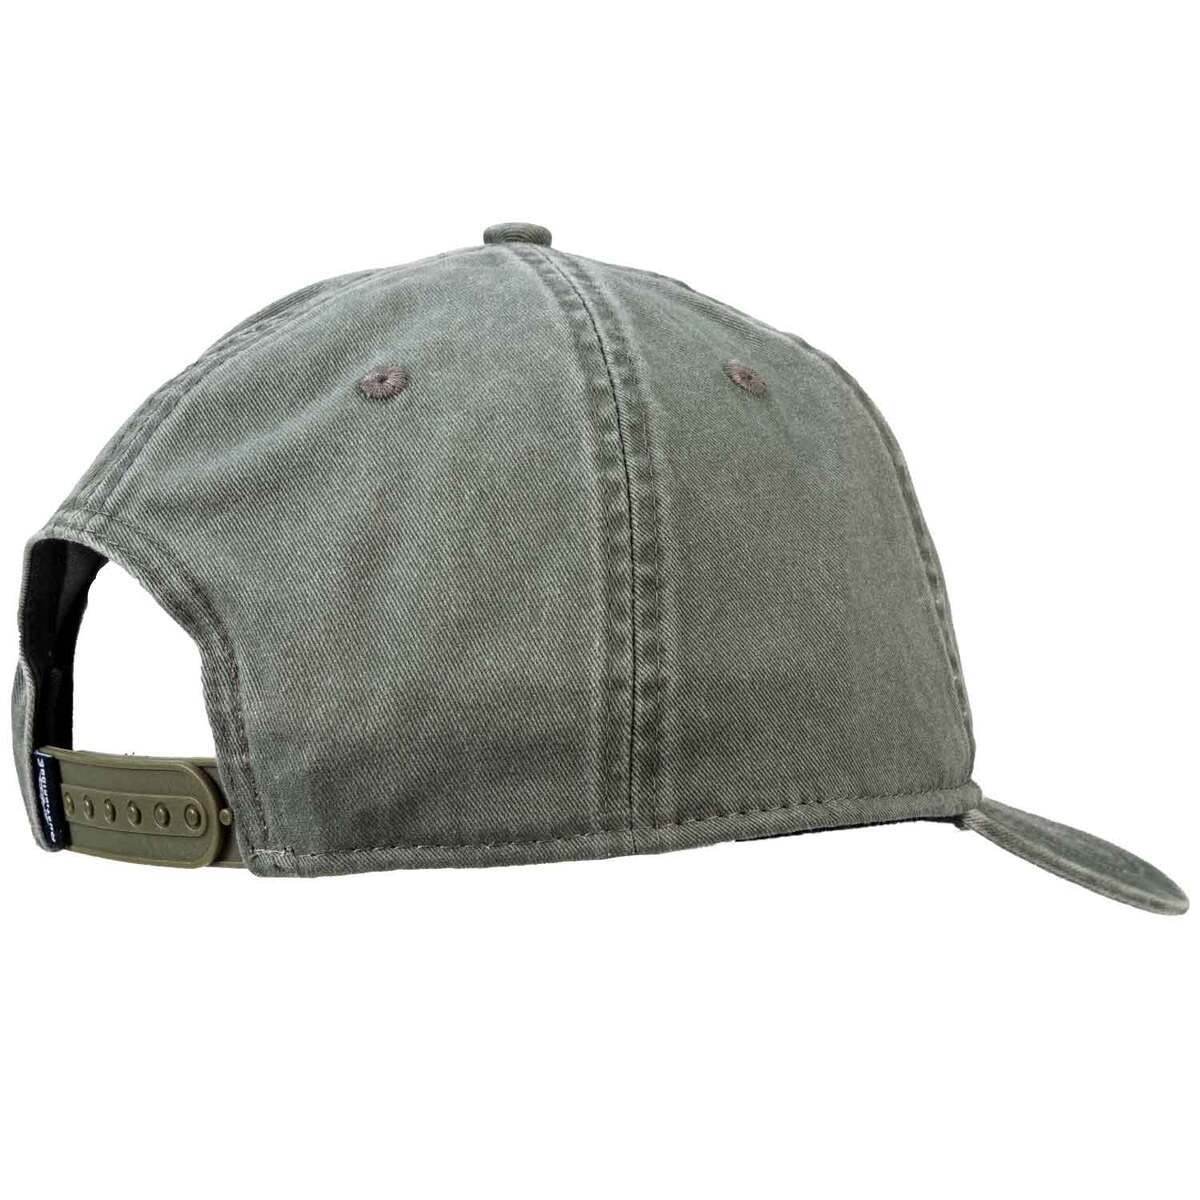 Rustic Ridge Unisex Canvas Adjustable Hat - Dark Green - One Size Fits ...